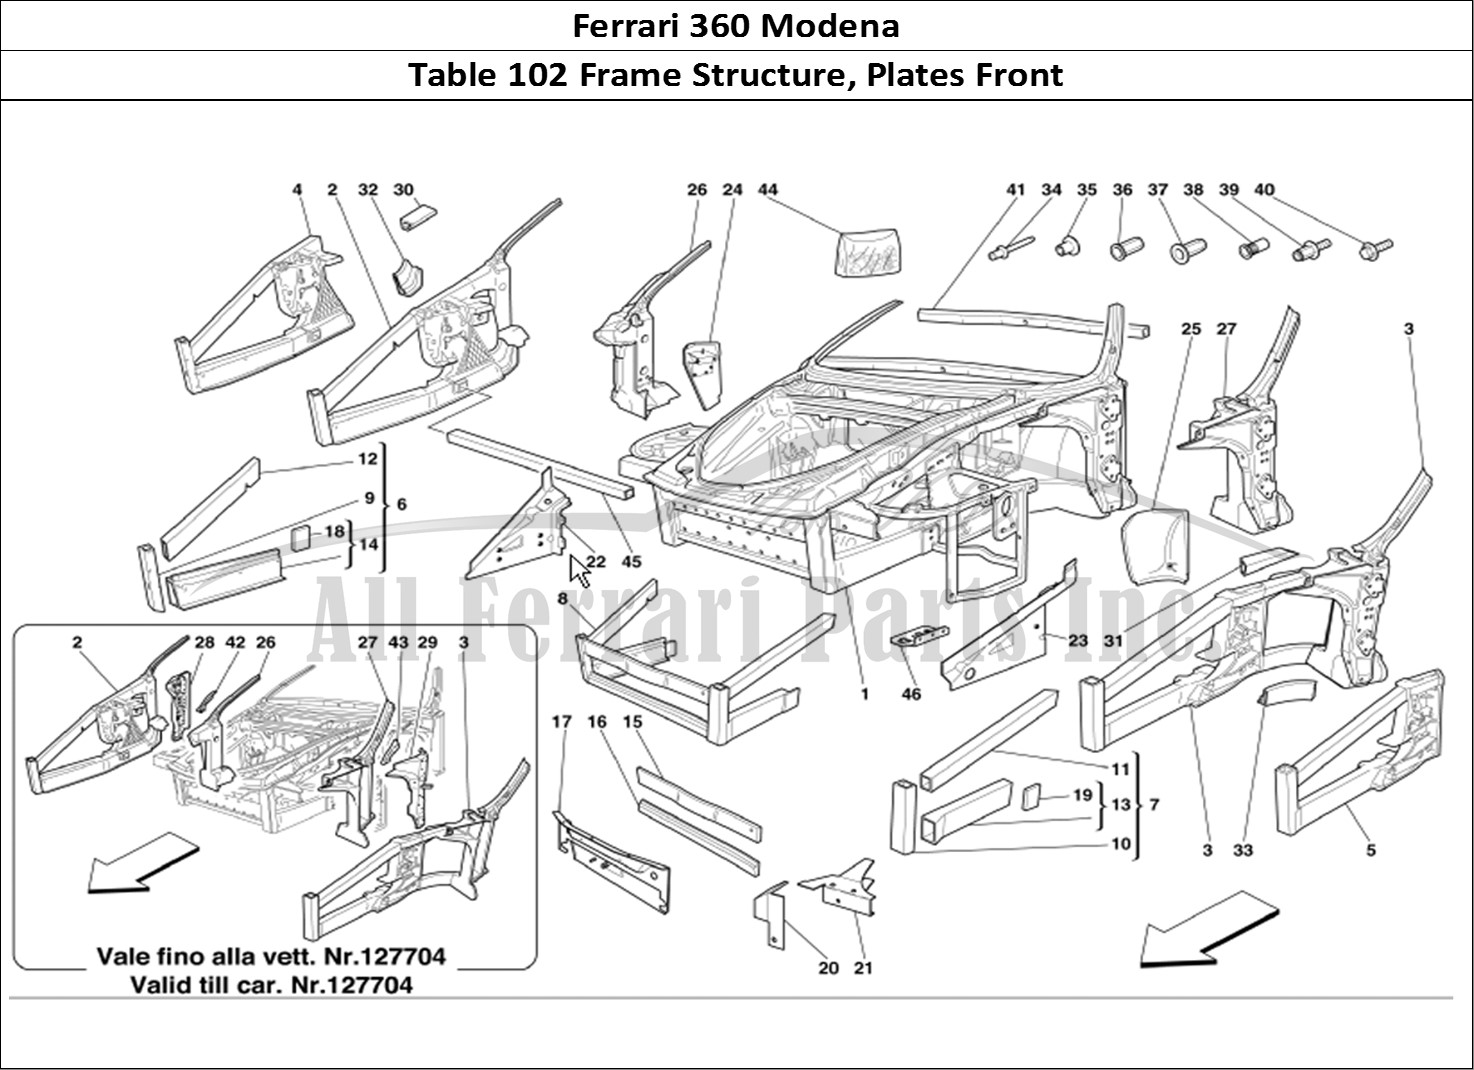 Ferrari Parts Ferrari 360 Modena Page 102 Frame Front Elements Stru